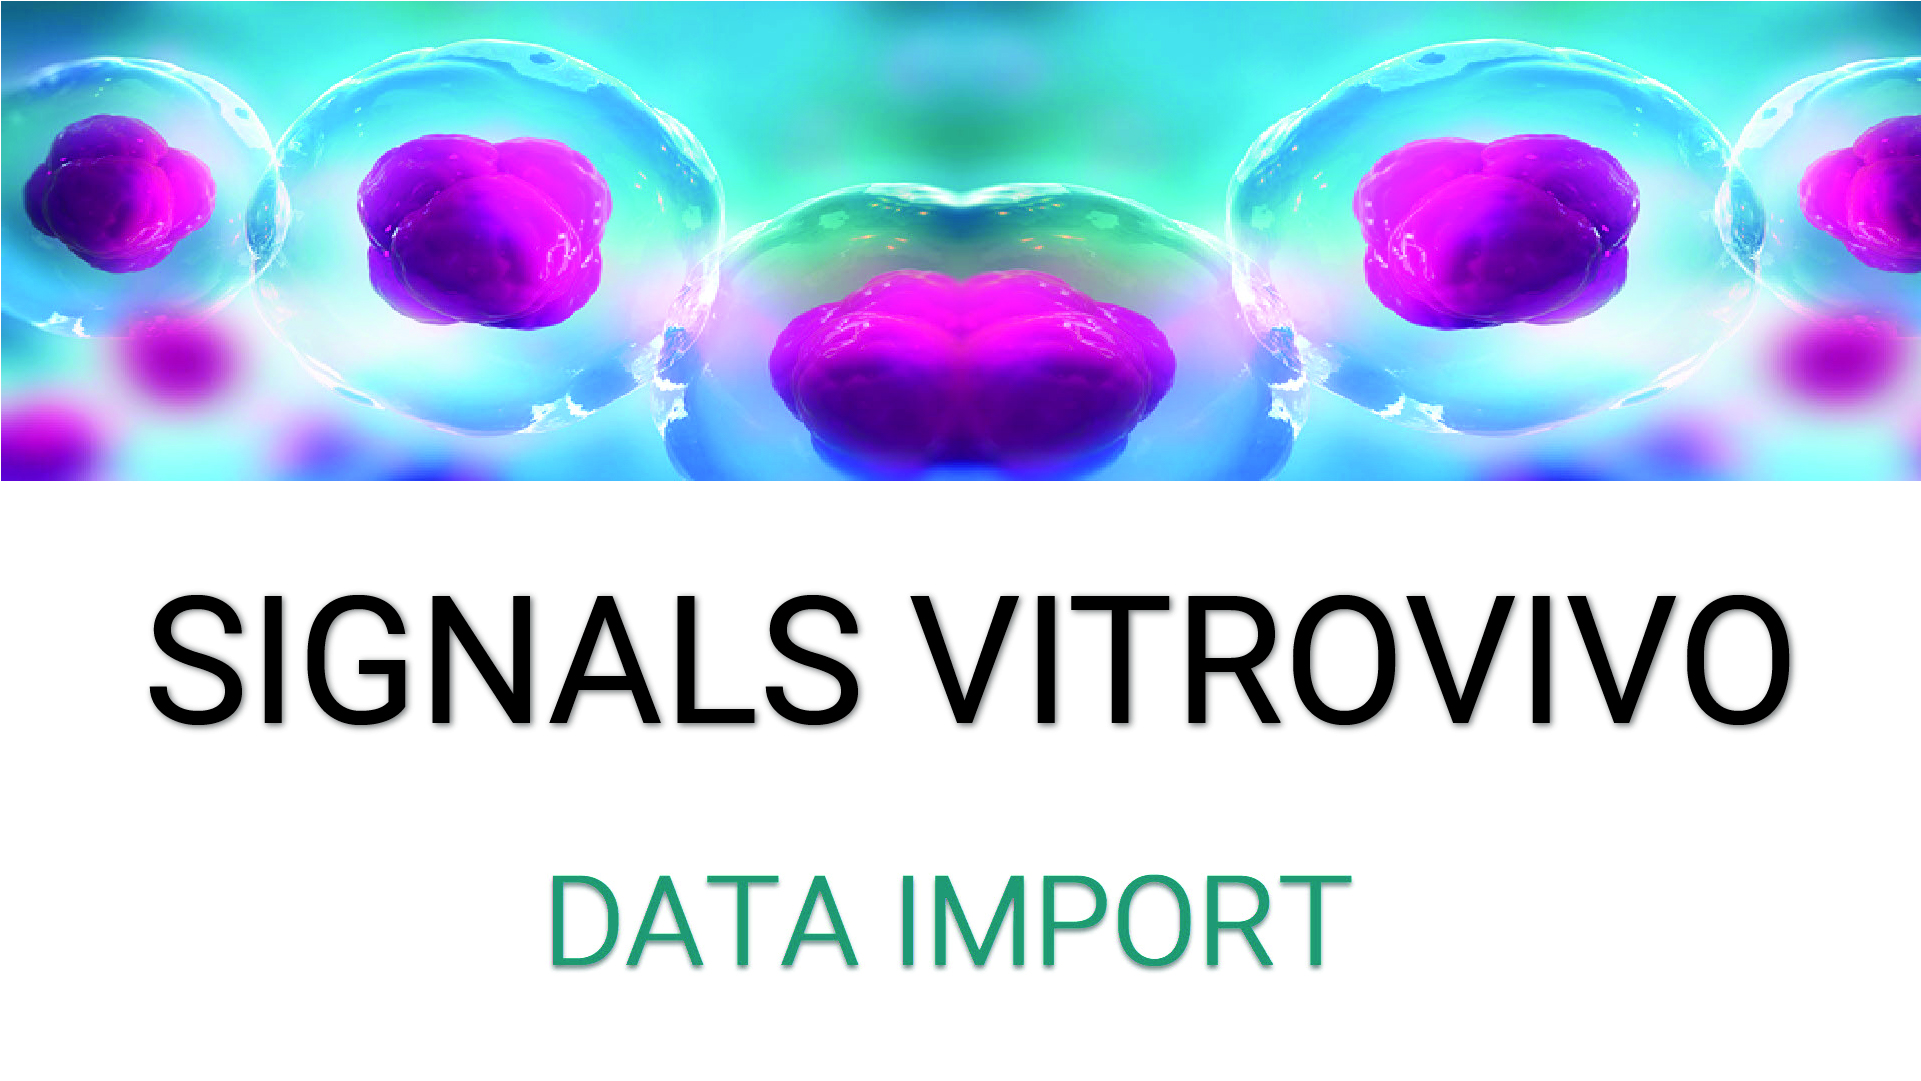 Watch Signals Vitro Vivo Features | 4 Part Video Series | Data Import | PerkinElmer Informatics on YouTube.